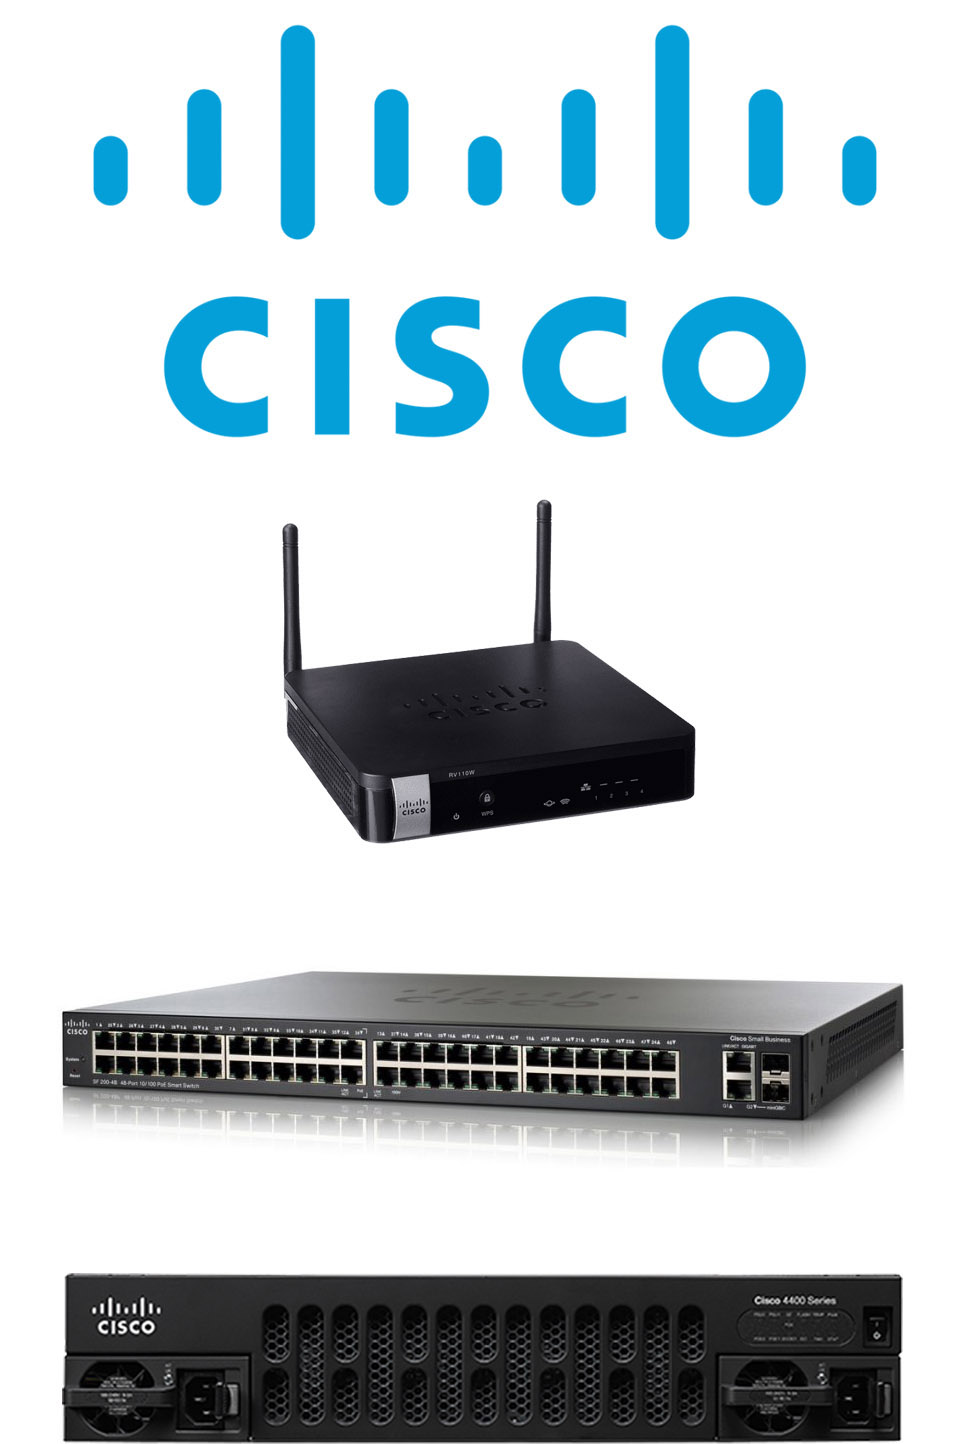 Cisco Installation Services in London